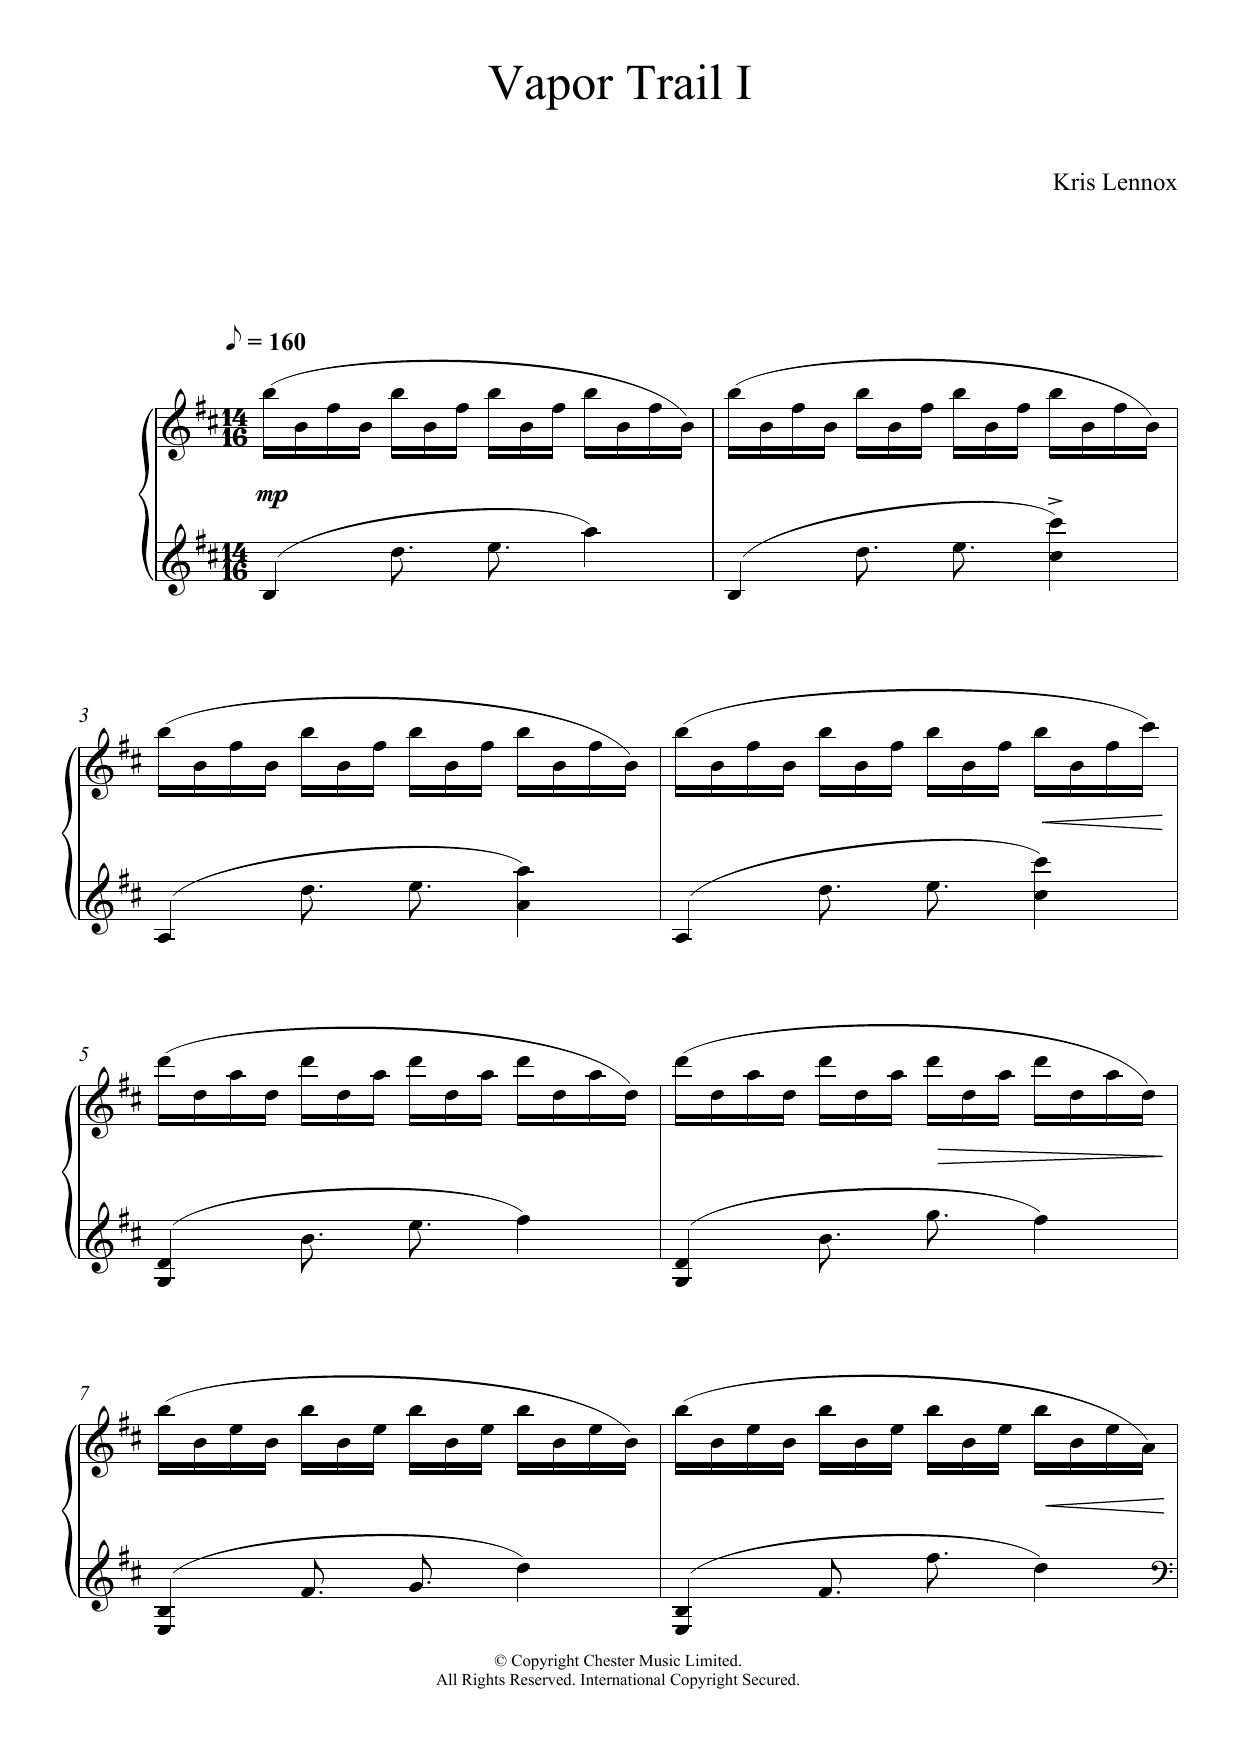 Kris Lennox Vapor Trails I Sheet Music Notes & Chords for Piano - Download or Print PDF